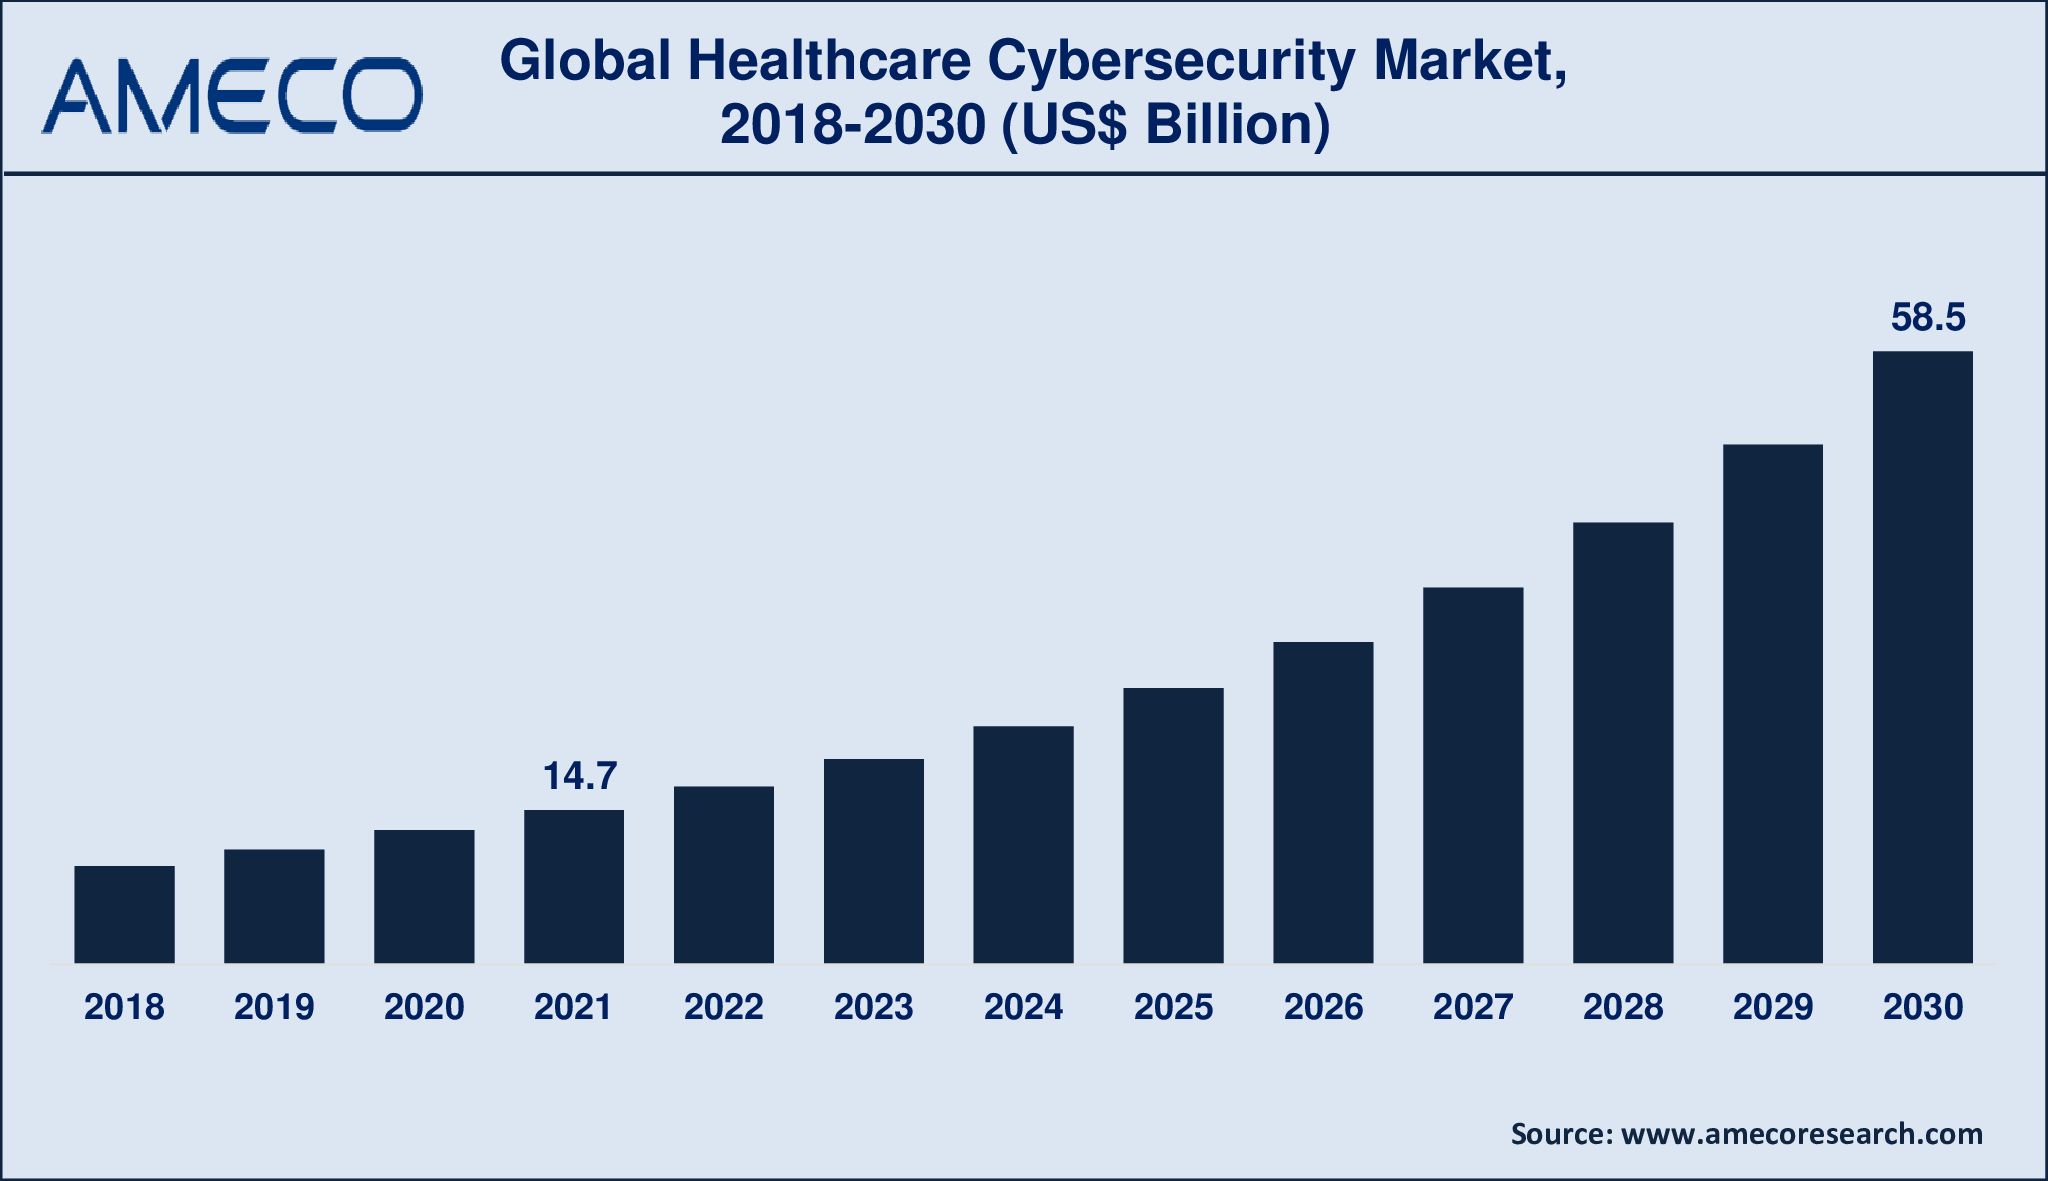 Healthcare Cybersecurity Market Dynamics